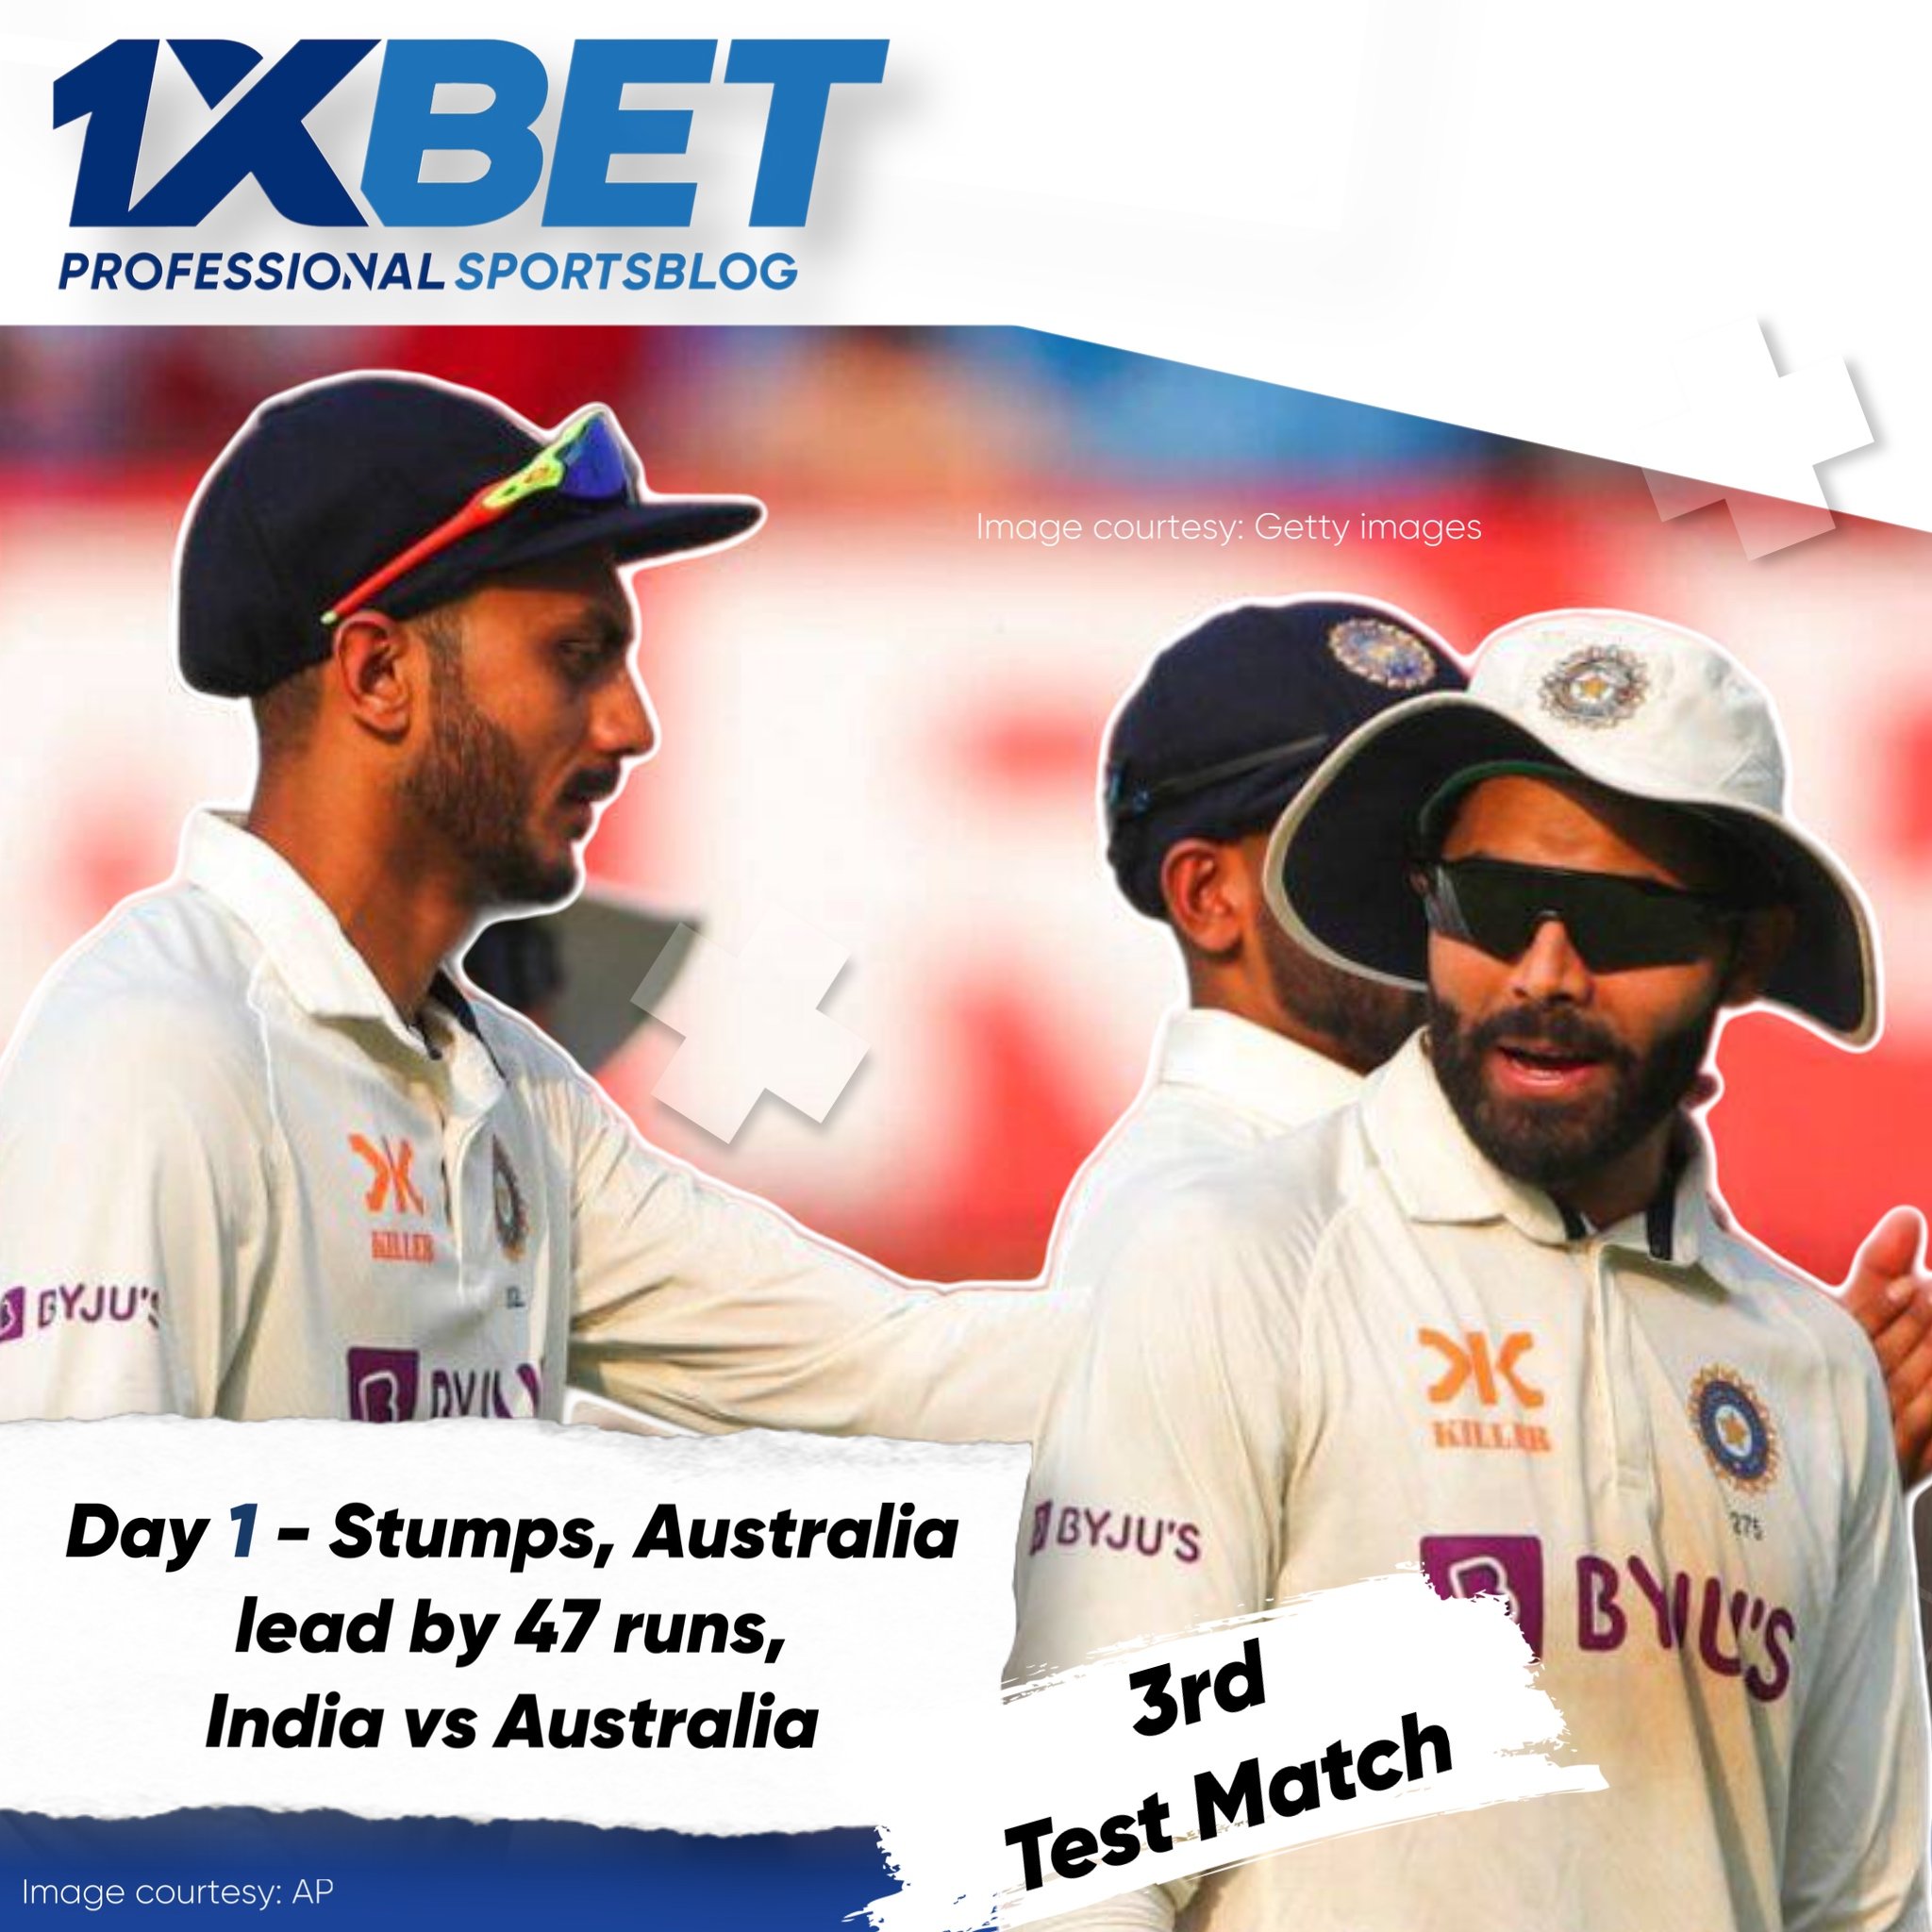 Day 1 - Stumps, Australia lead by 47 runs